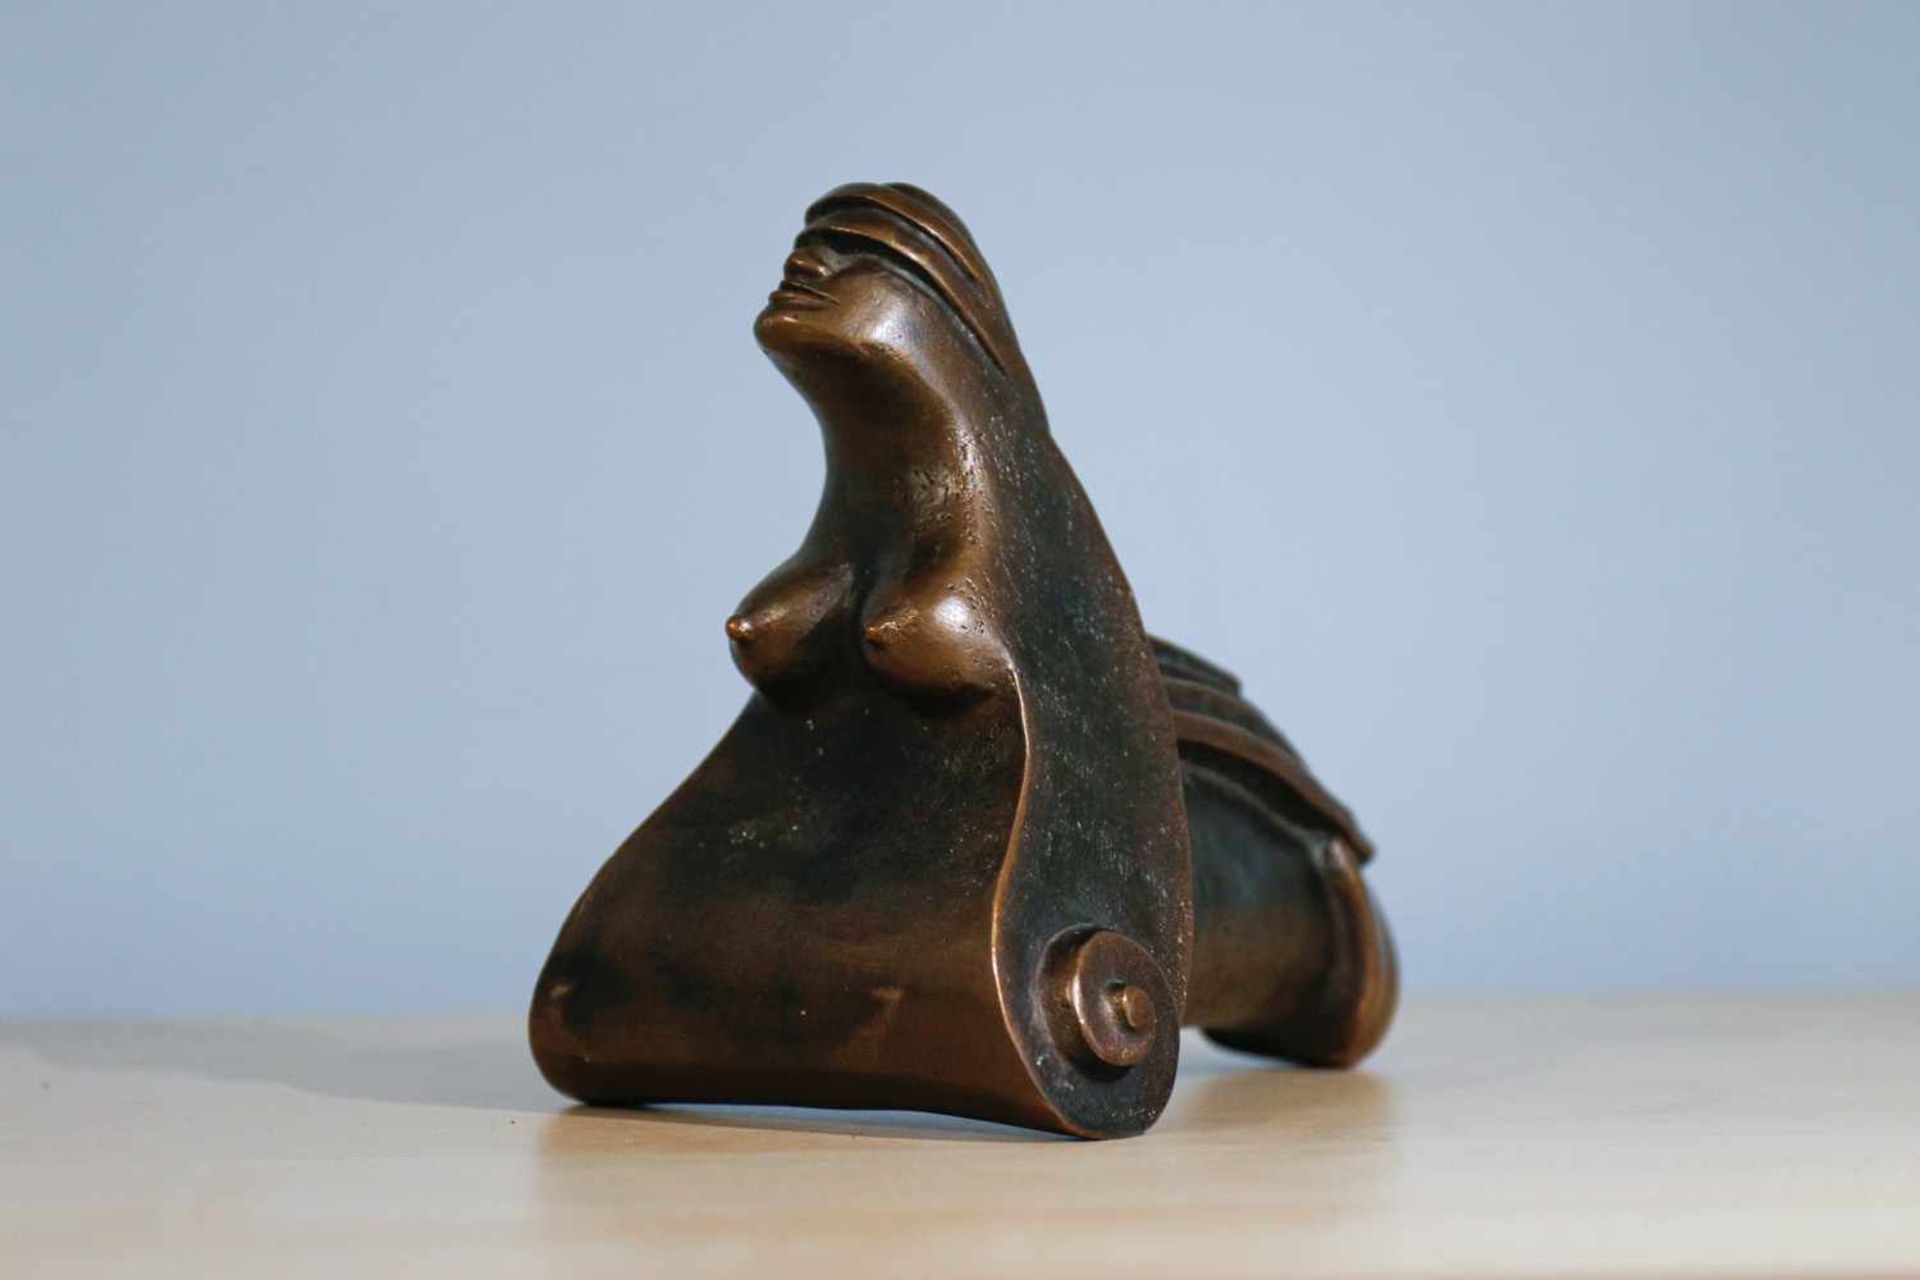 Tom Lehnigk, "Engel" Bronze 0/50, 2006, Erotika, 10 x 13,5 x 14 cm- - -22.50 % buyer's premium on - Image 4 of 5